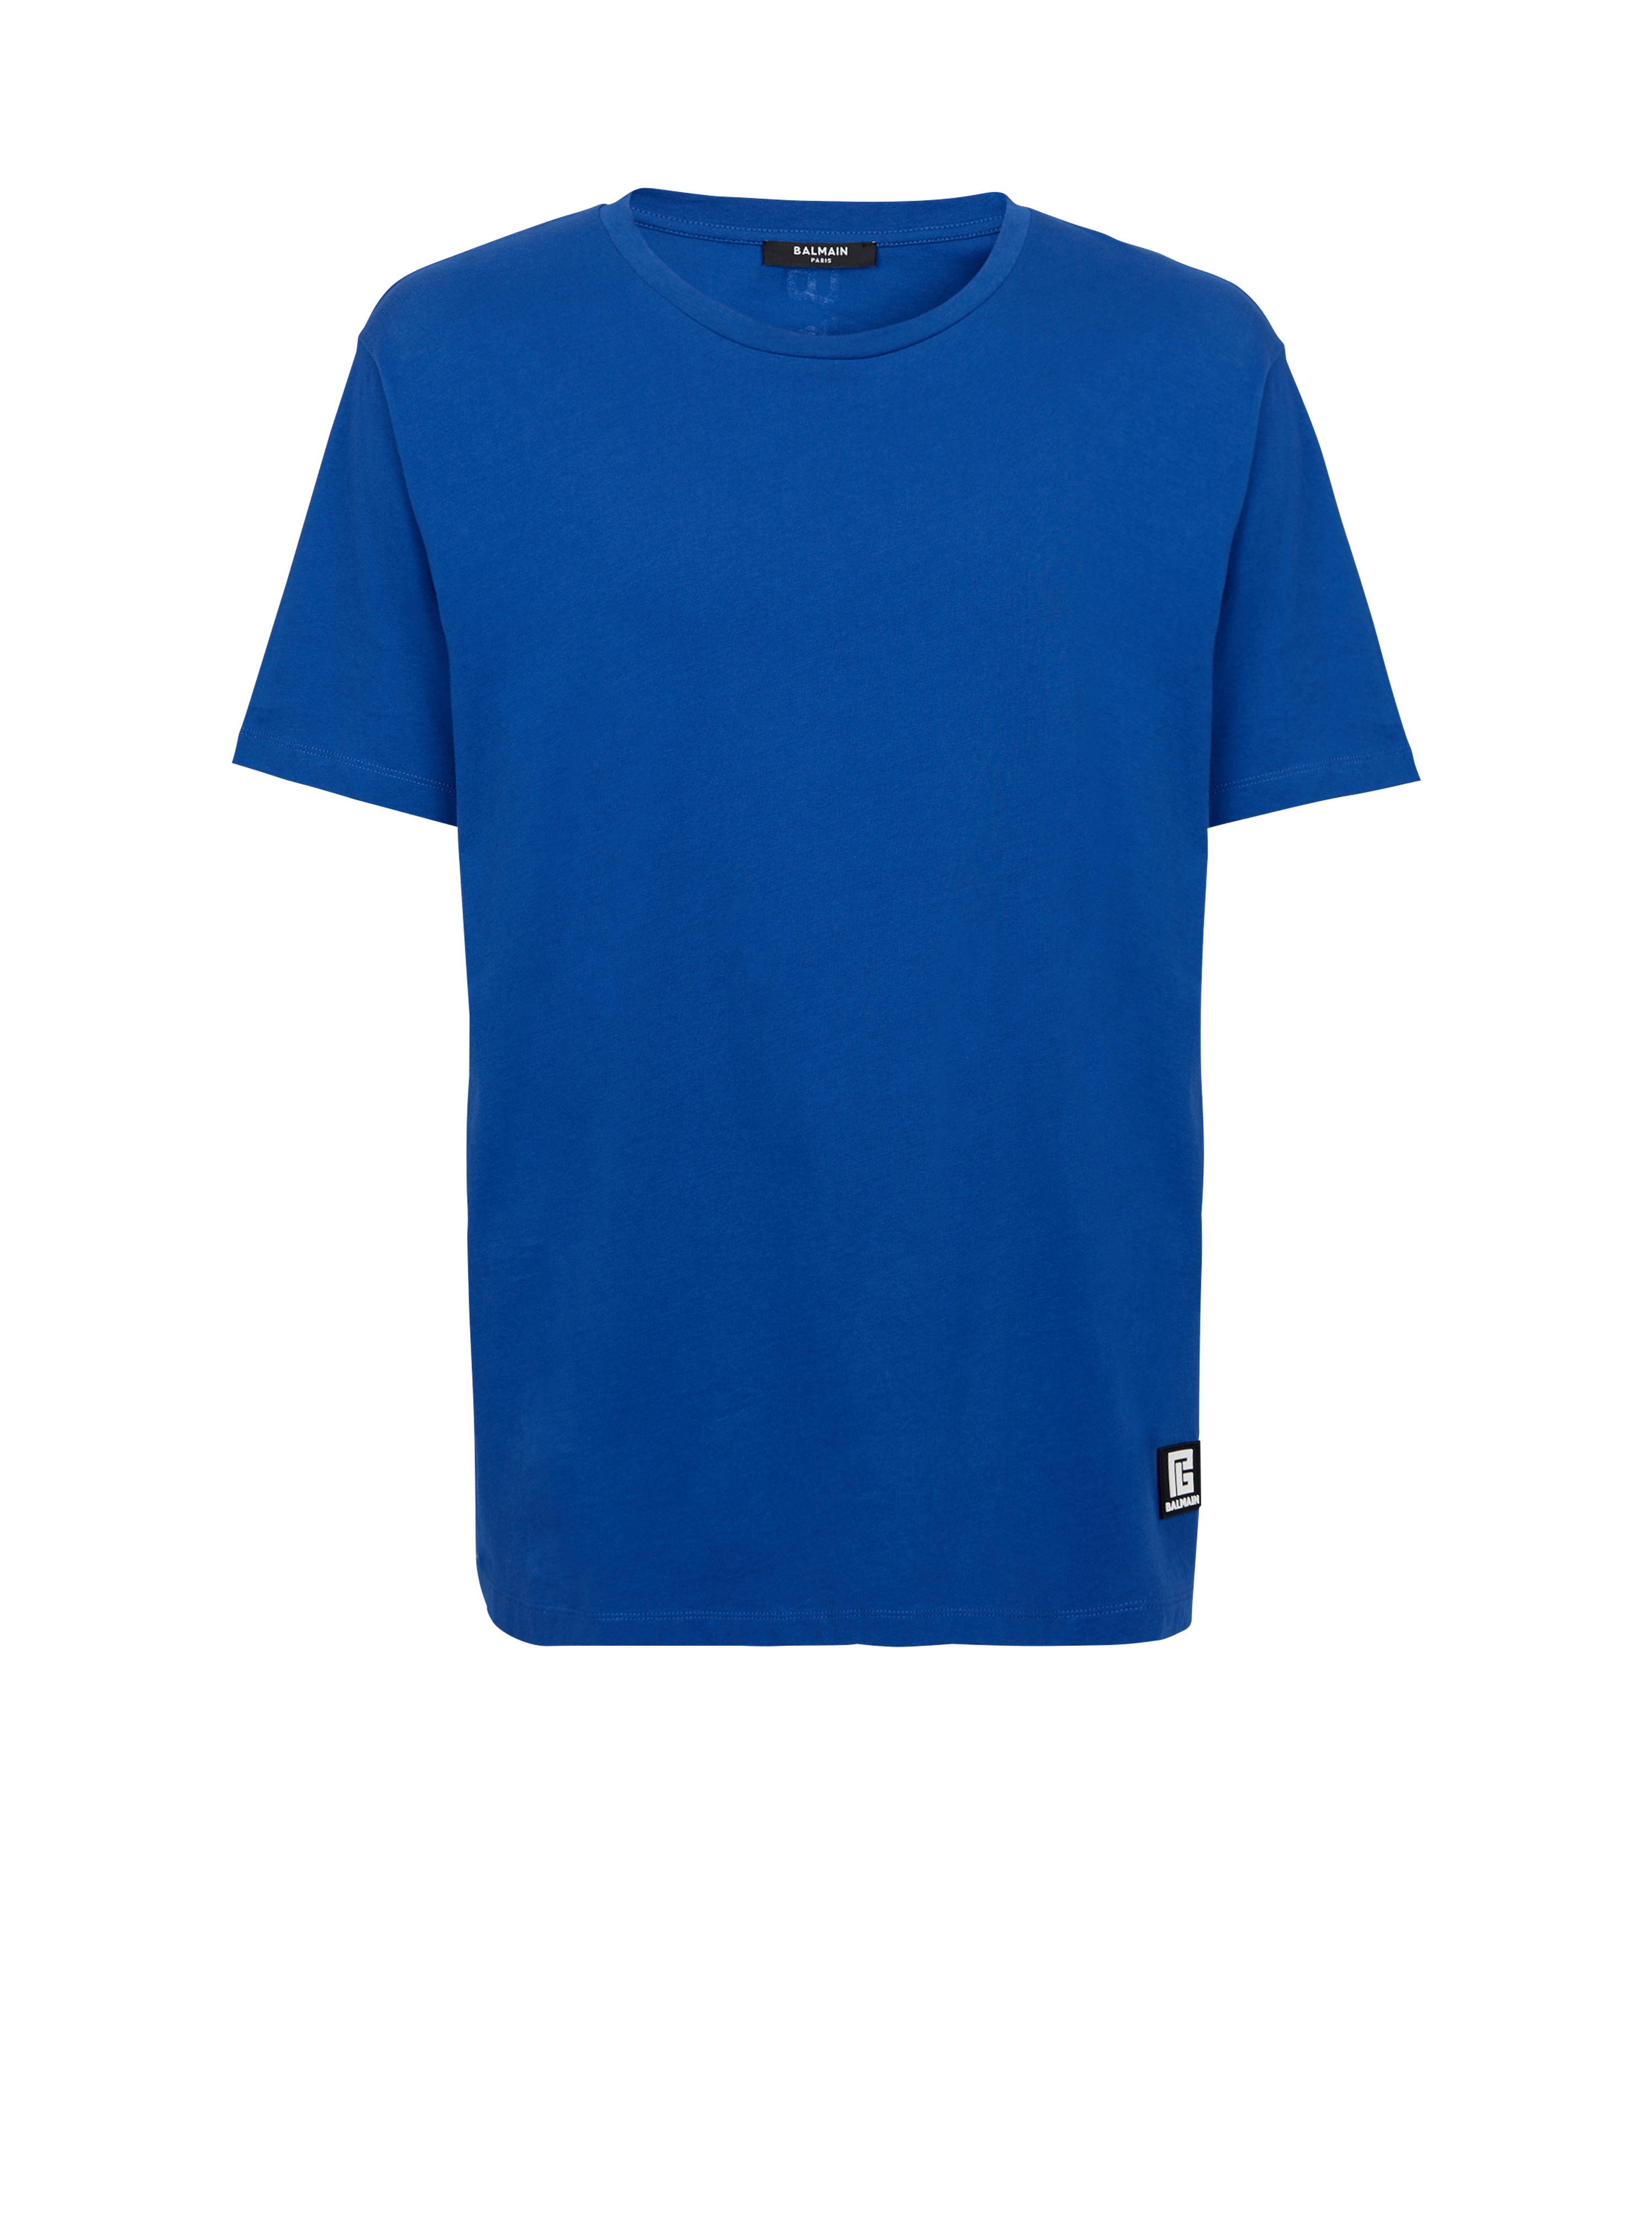 T-shirt oversize en coton imprimé logo Balmain, bleu marine